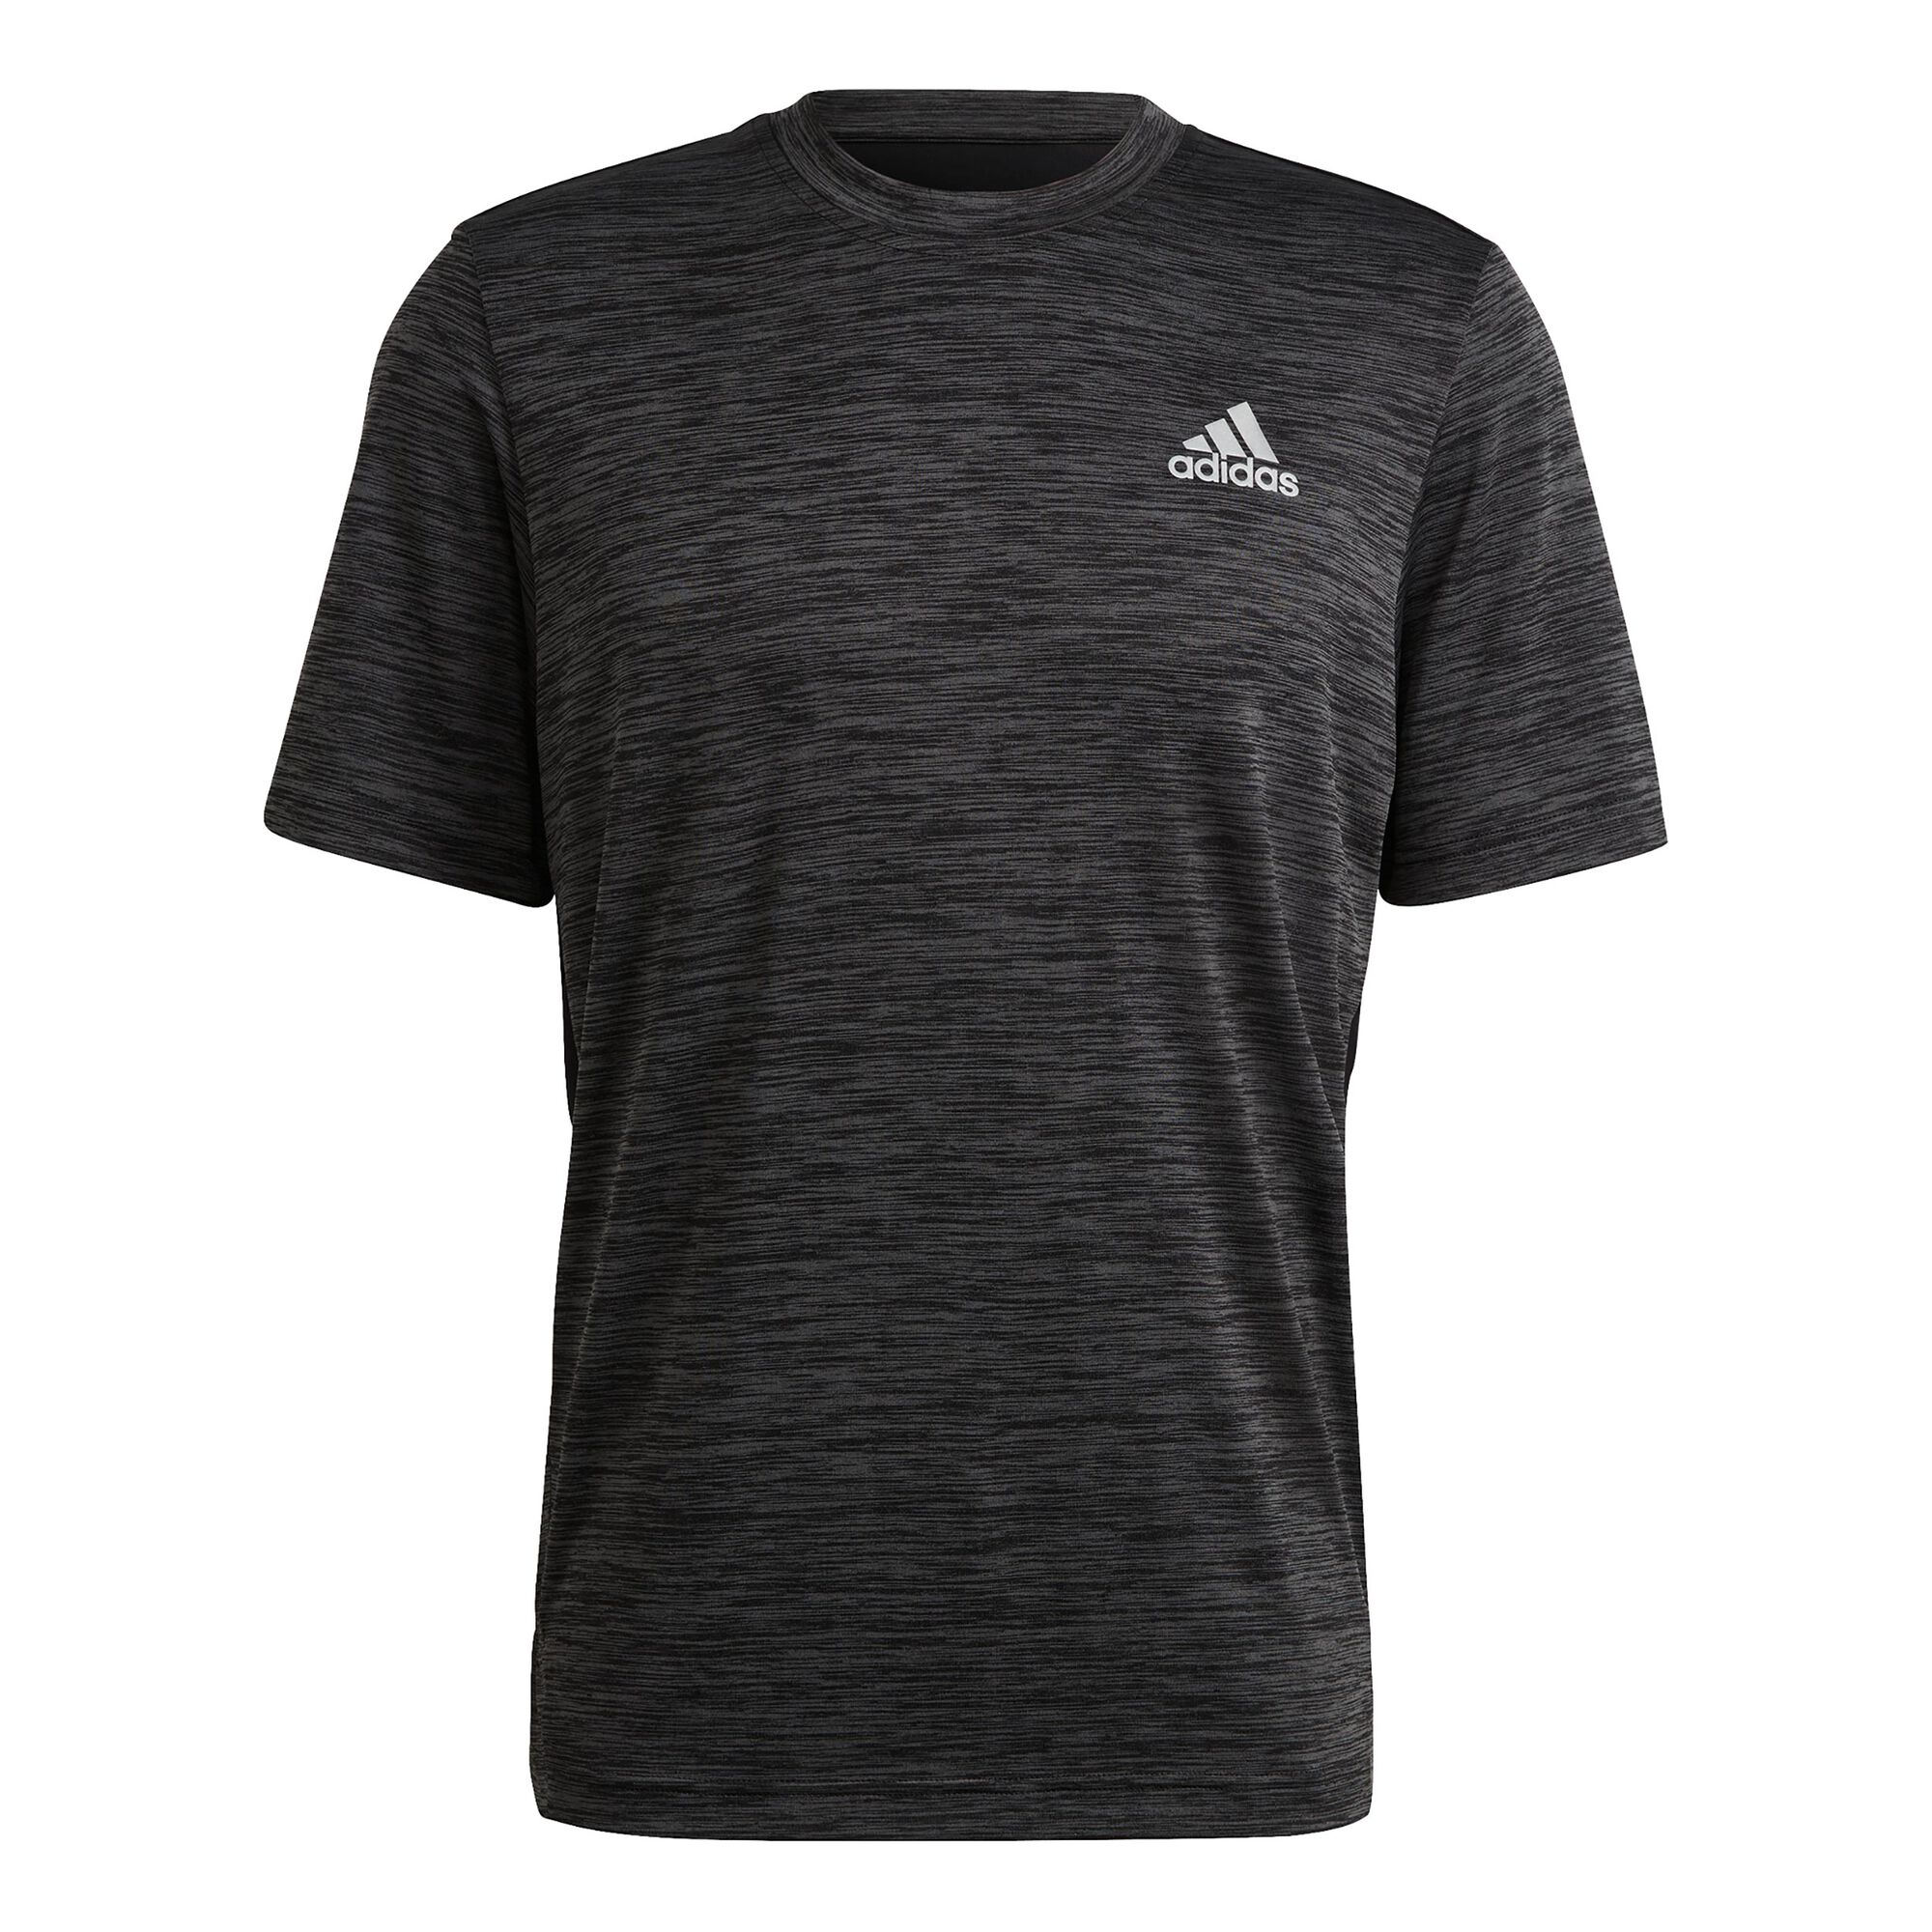 Buy adidas T-Shirt Men Black, White online | Tennis Point COM